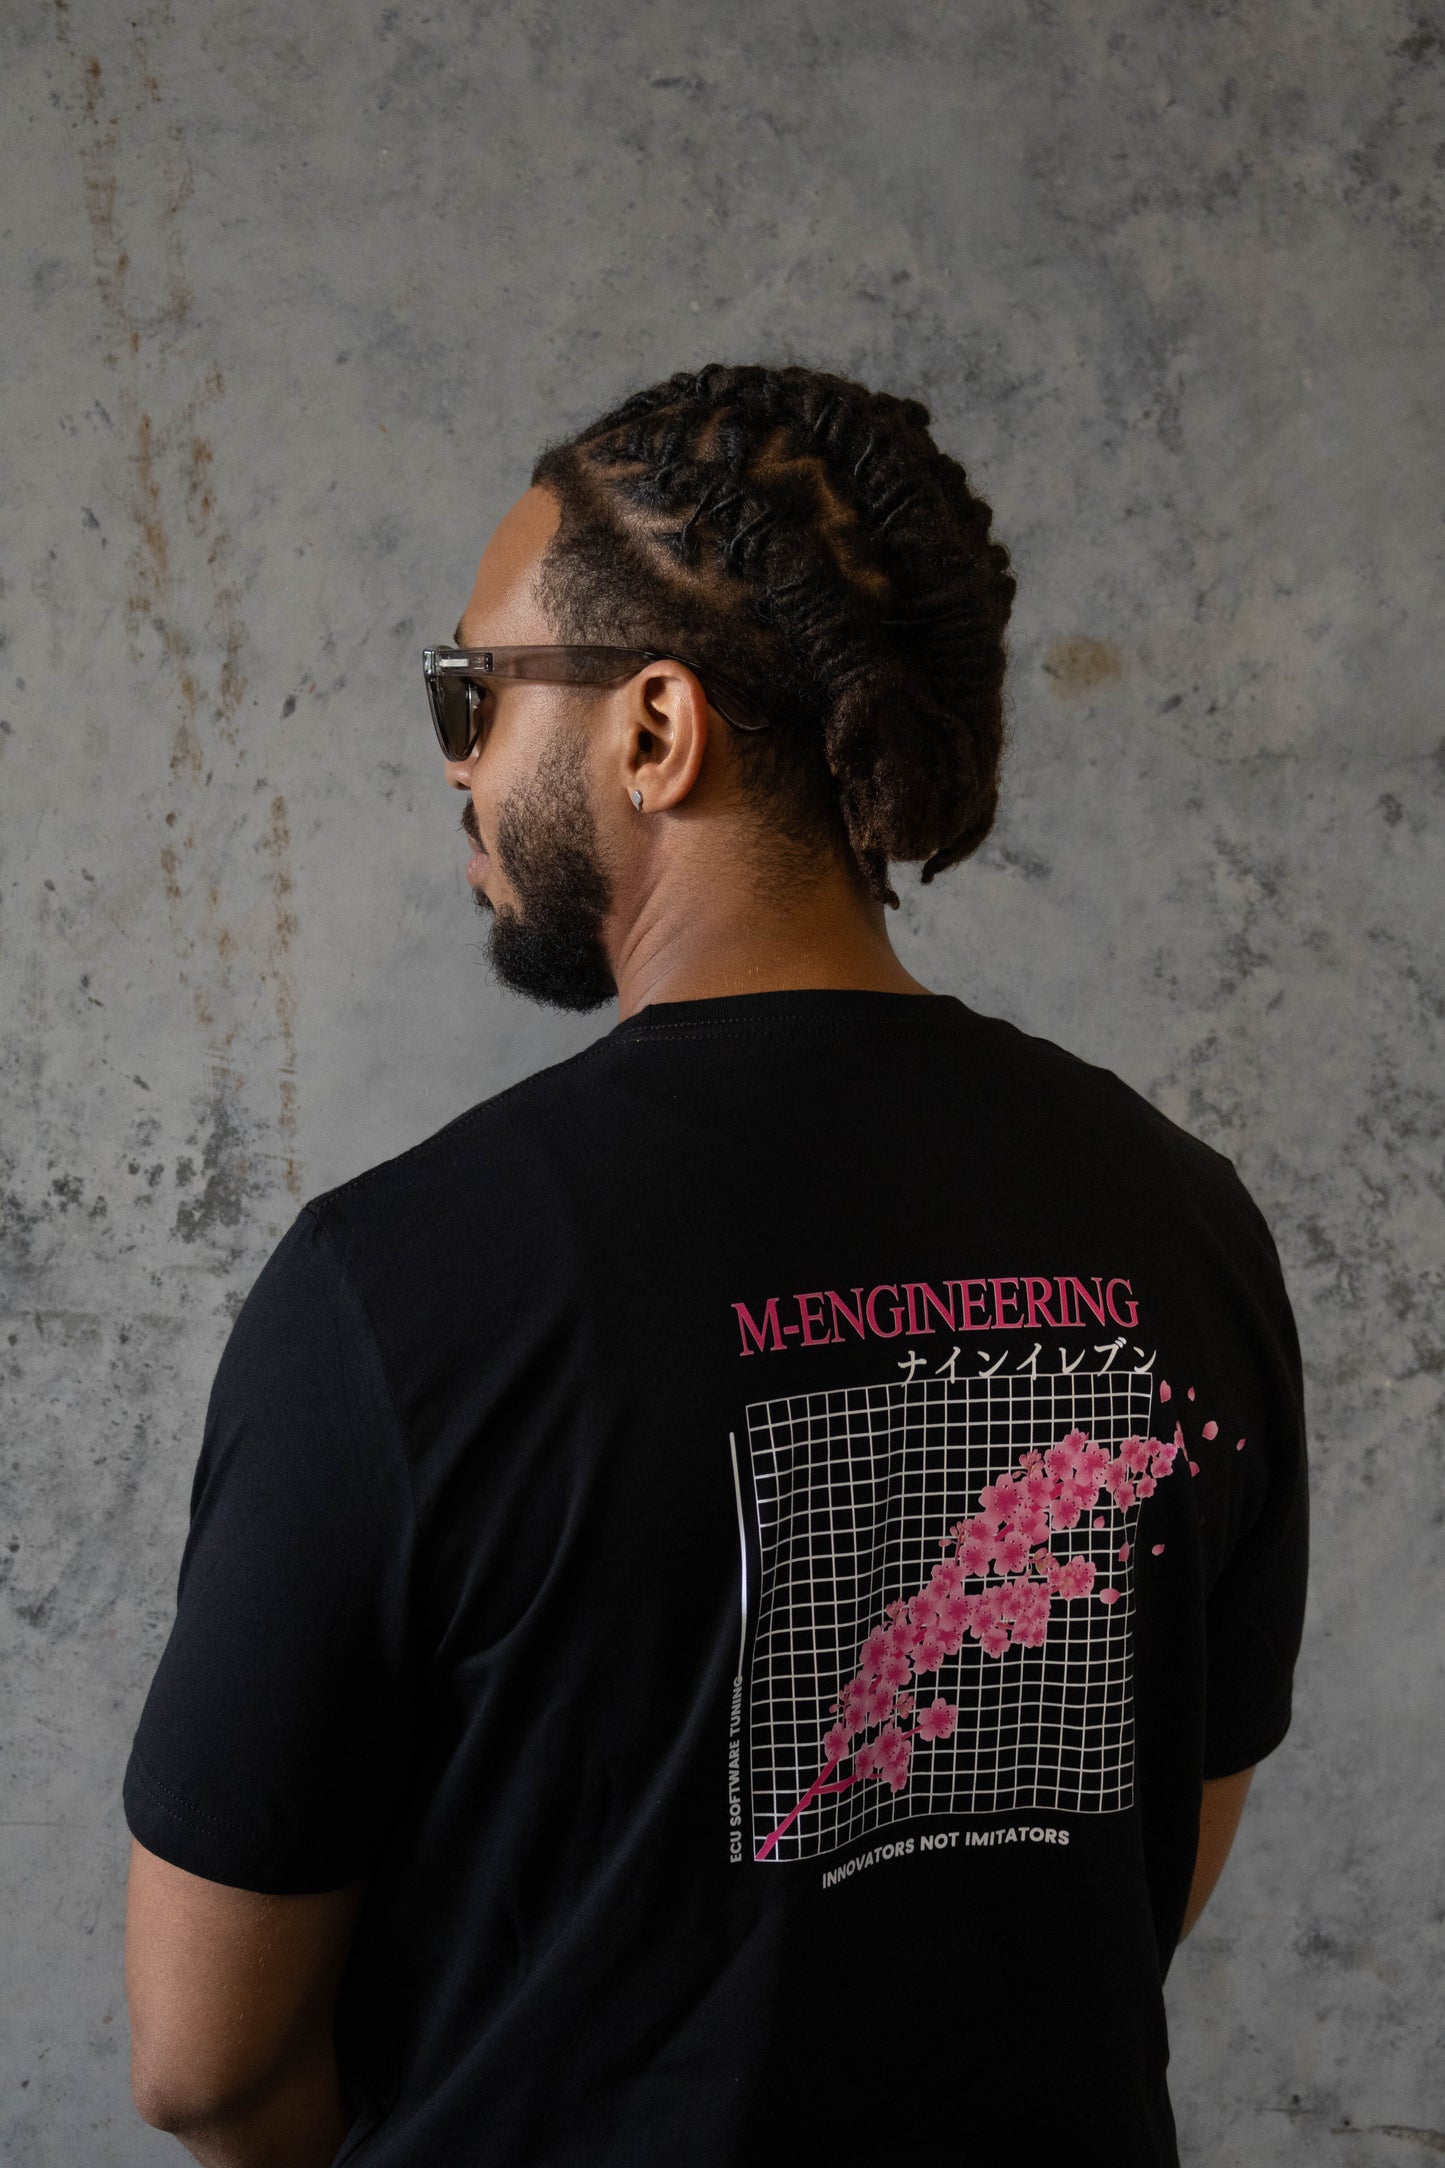 M-Engineering "Cherry Blossoms" JDM T-Shirt